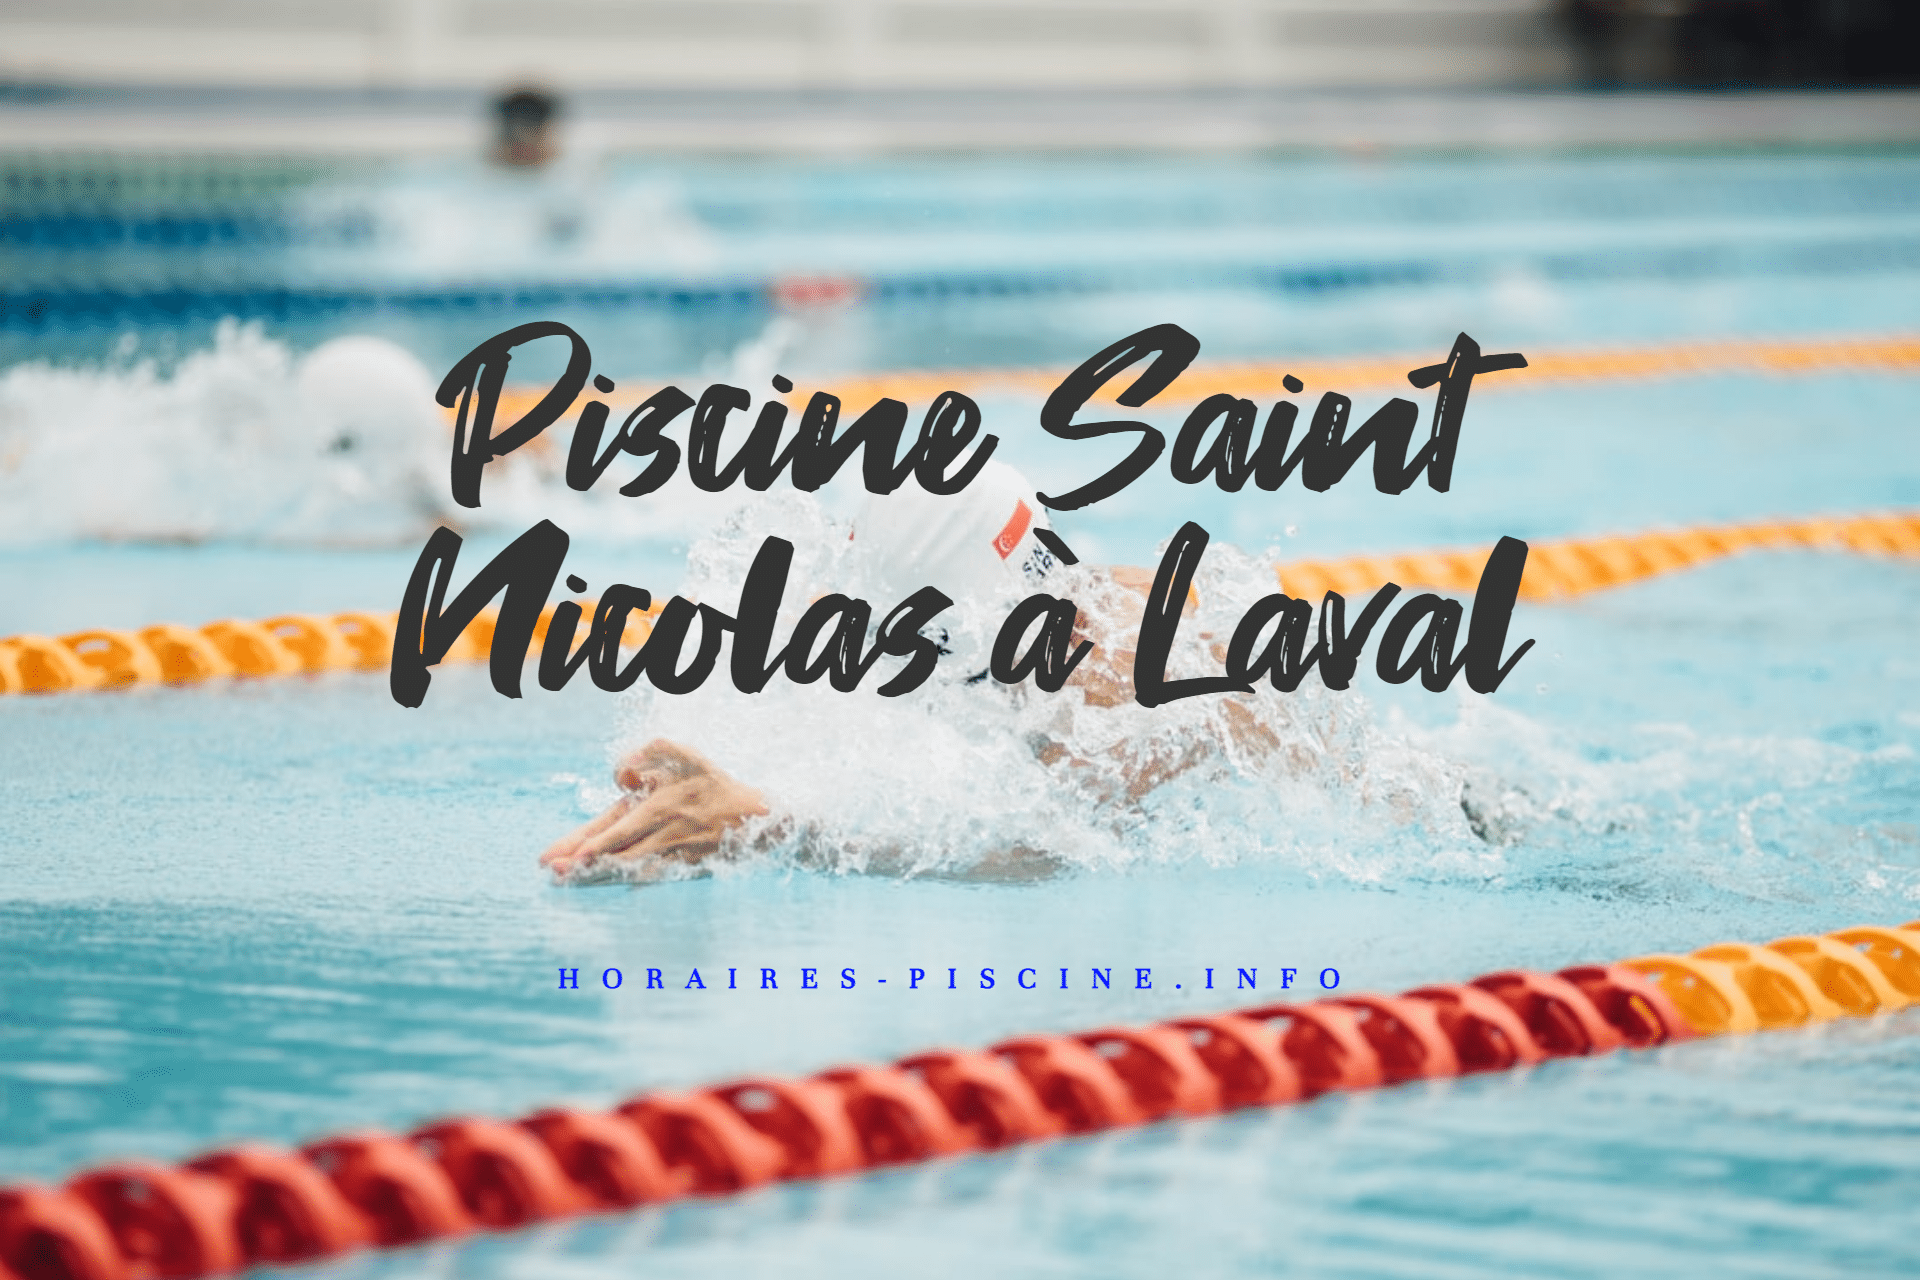 Piscine Saint Nicolas à Laval